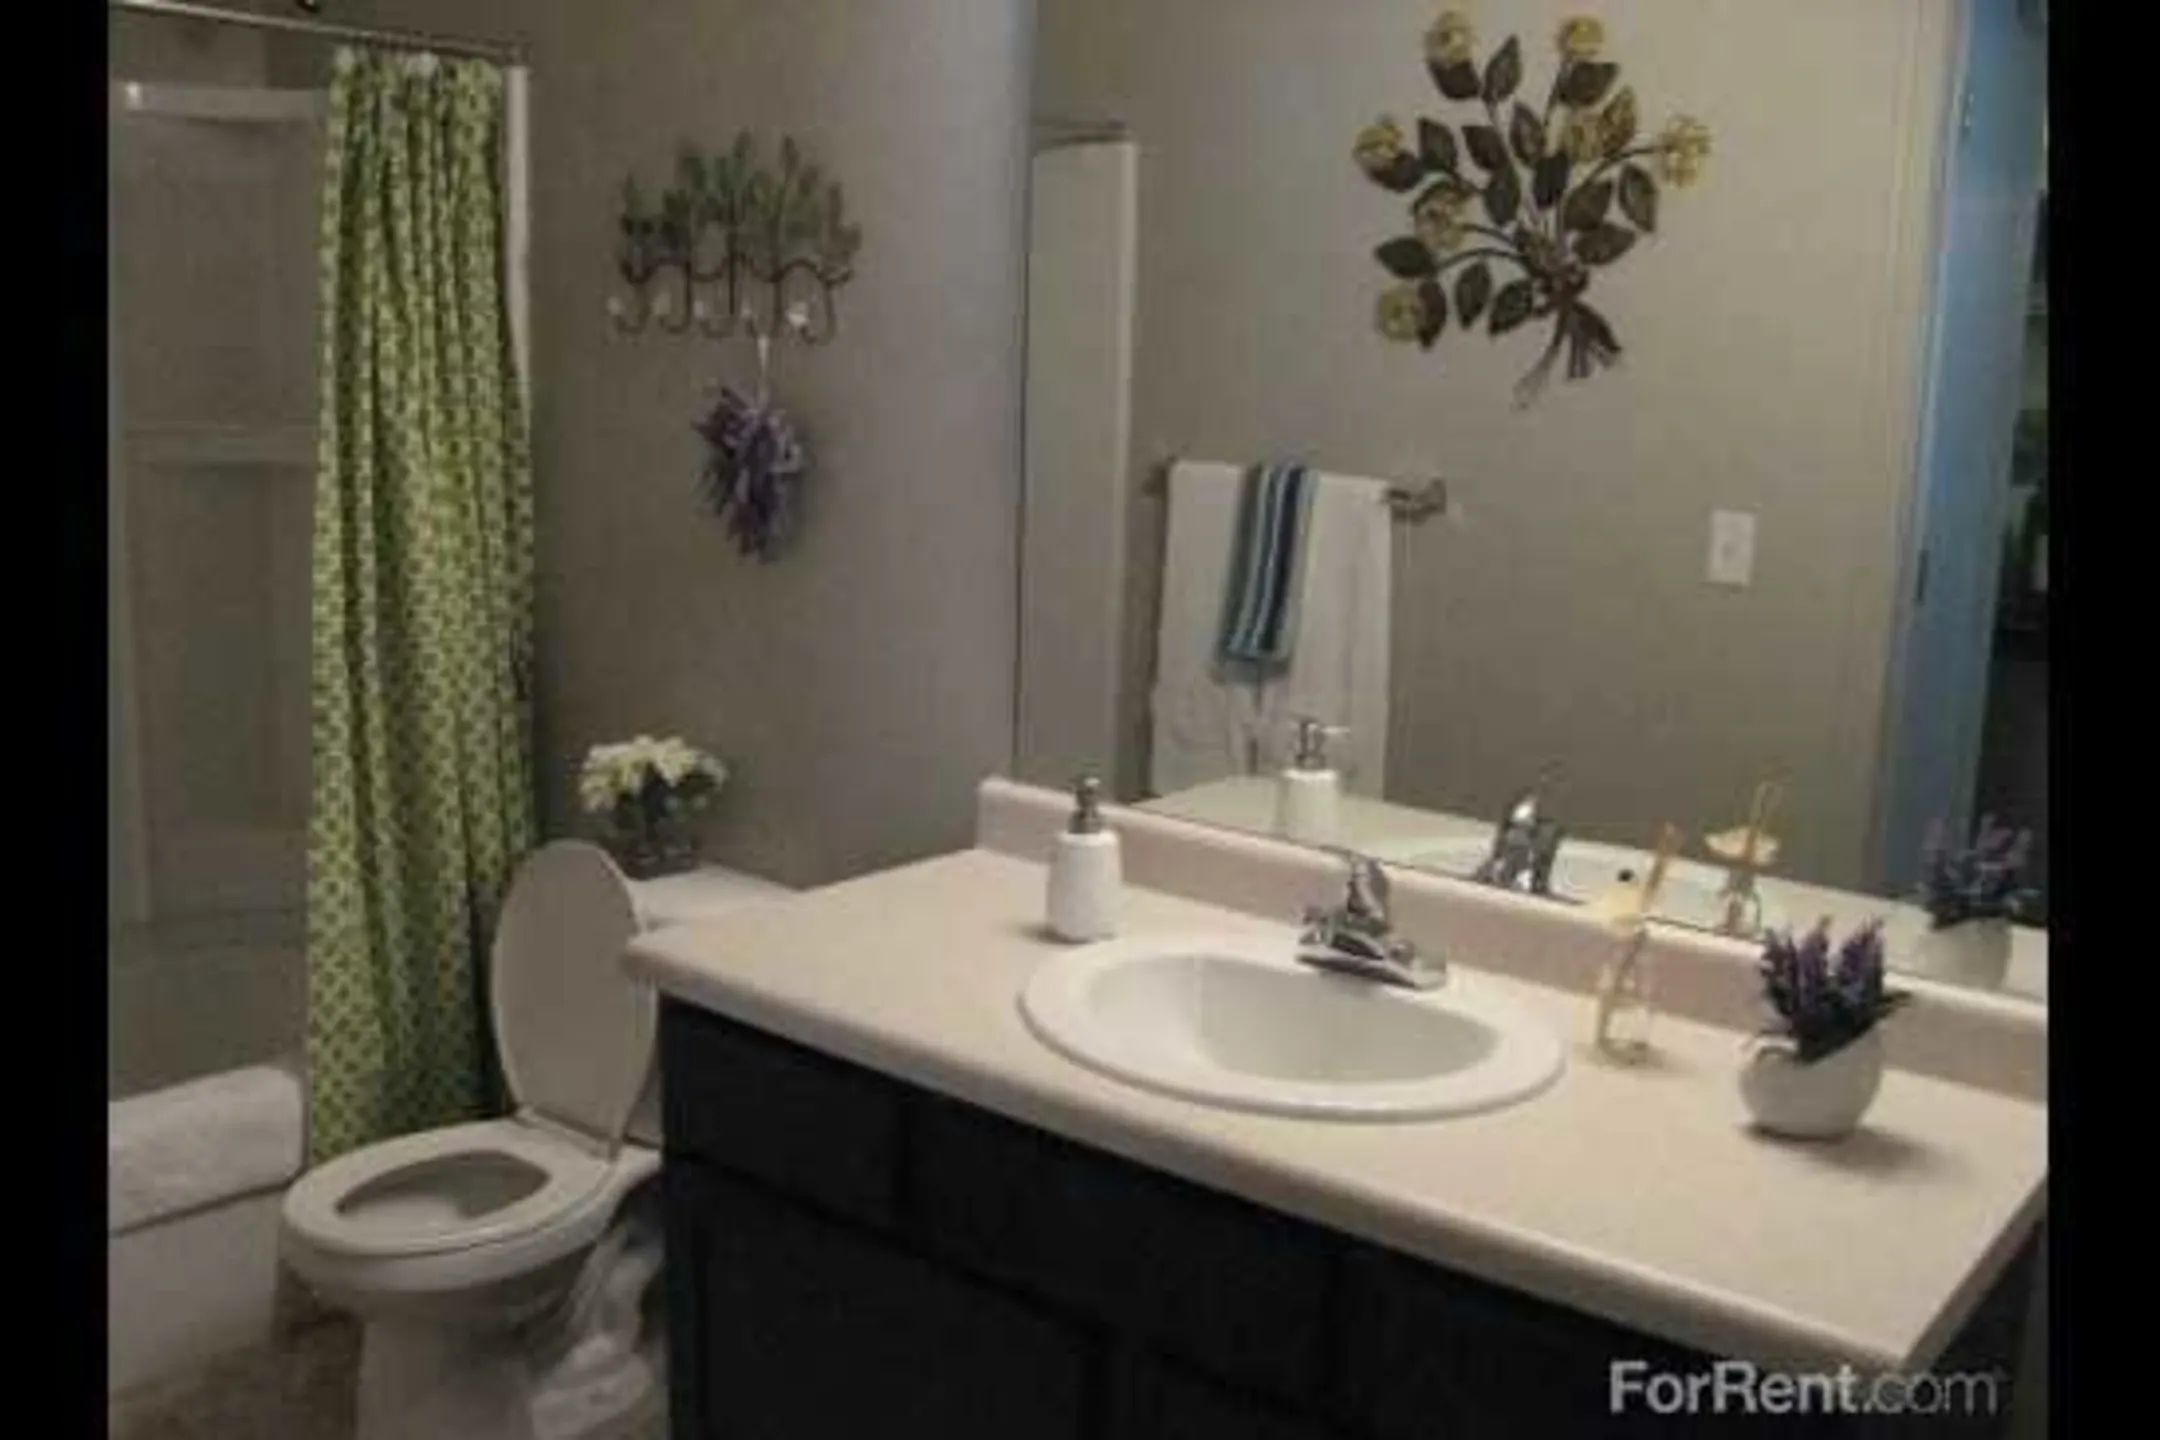 Bathroom - Brickgate Apartments - Salt Lake City, UT